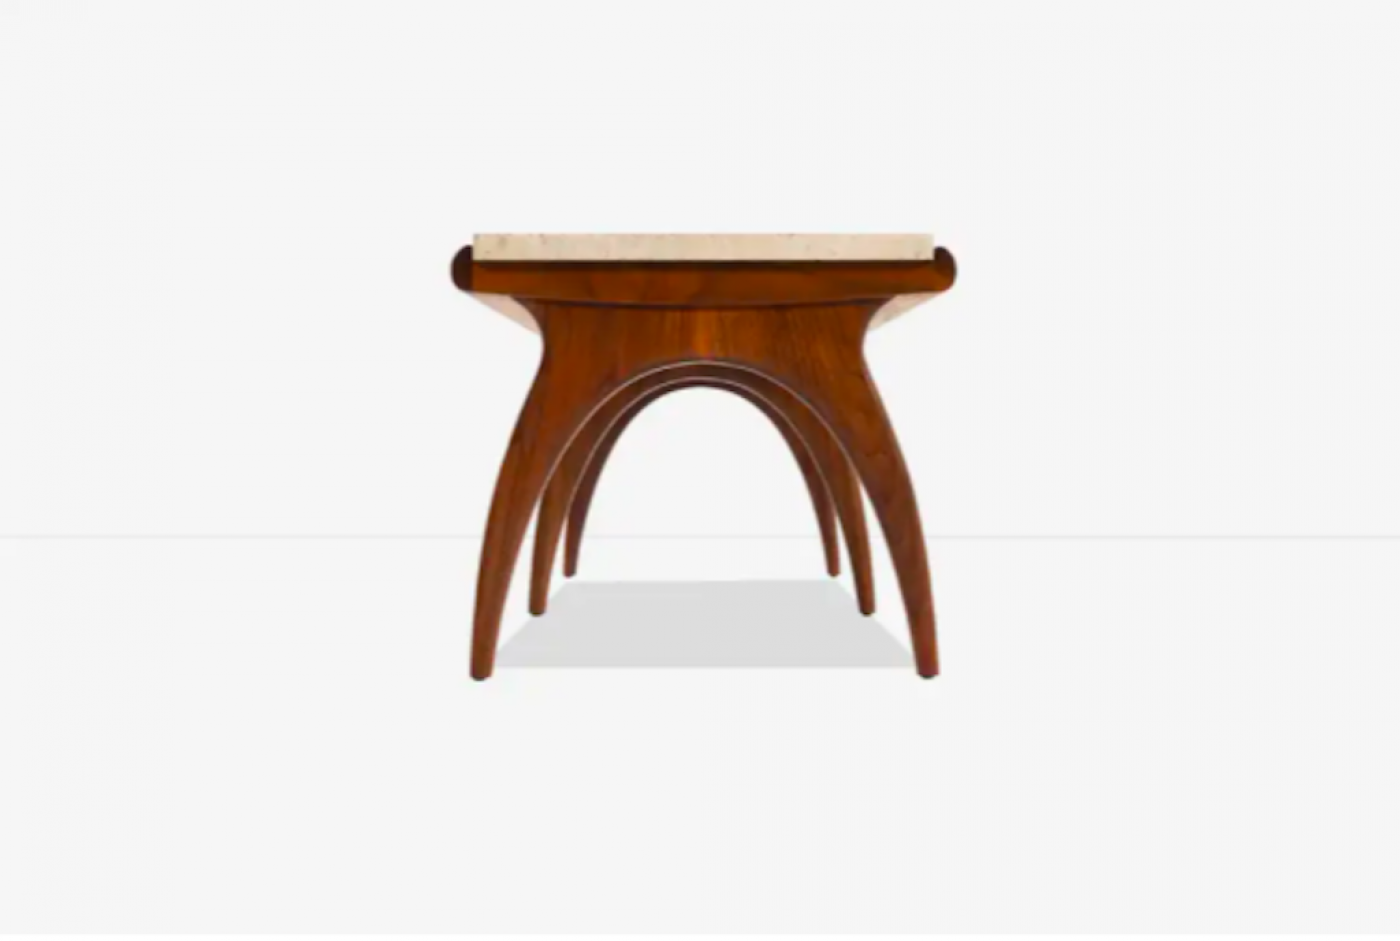 Coffee table designed by Bertha Schaefer, Singer & Sons